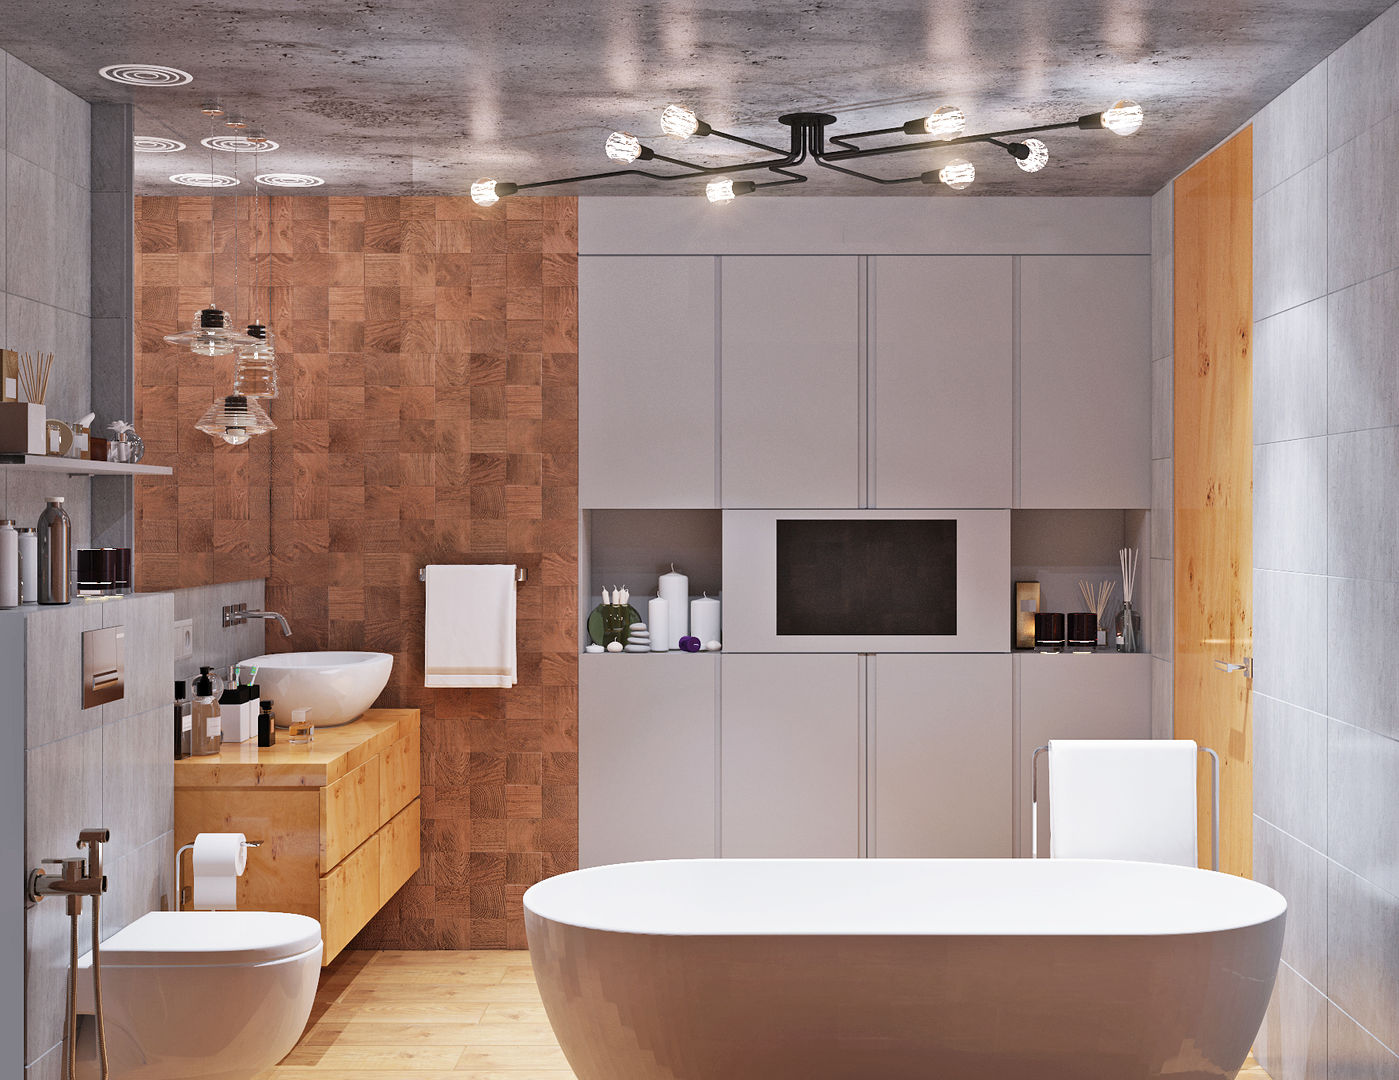 Душевая и ванная комнаты класса люкс, Студия дизайна ROMANIUK DESIGN Студия дизайна ROMANIUK DESIGN Industrial style bathrooms